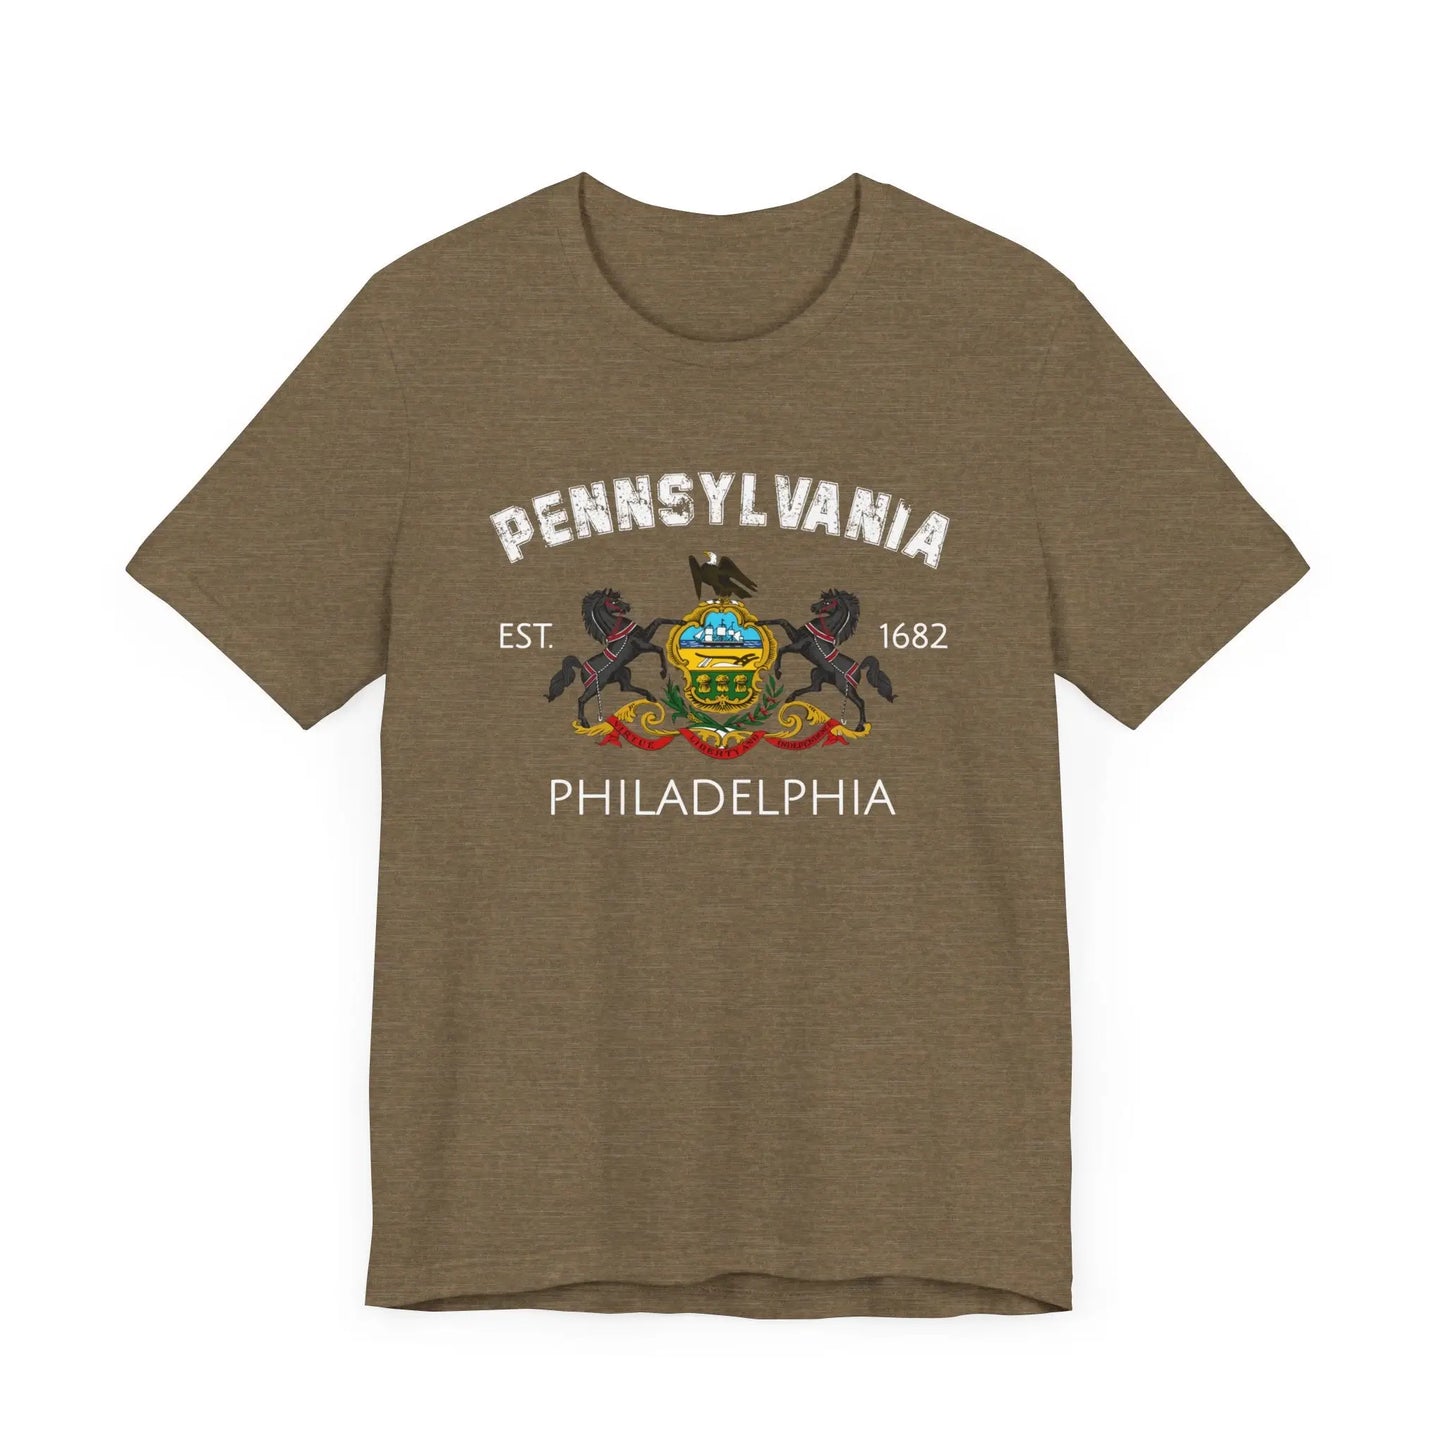 Philadelphia Pennsylvania Est 1682 Men's Jersey Short Sleeve Tee - Wicked Tees